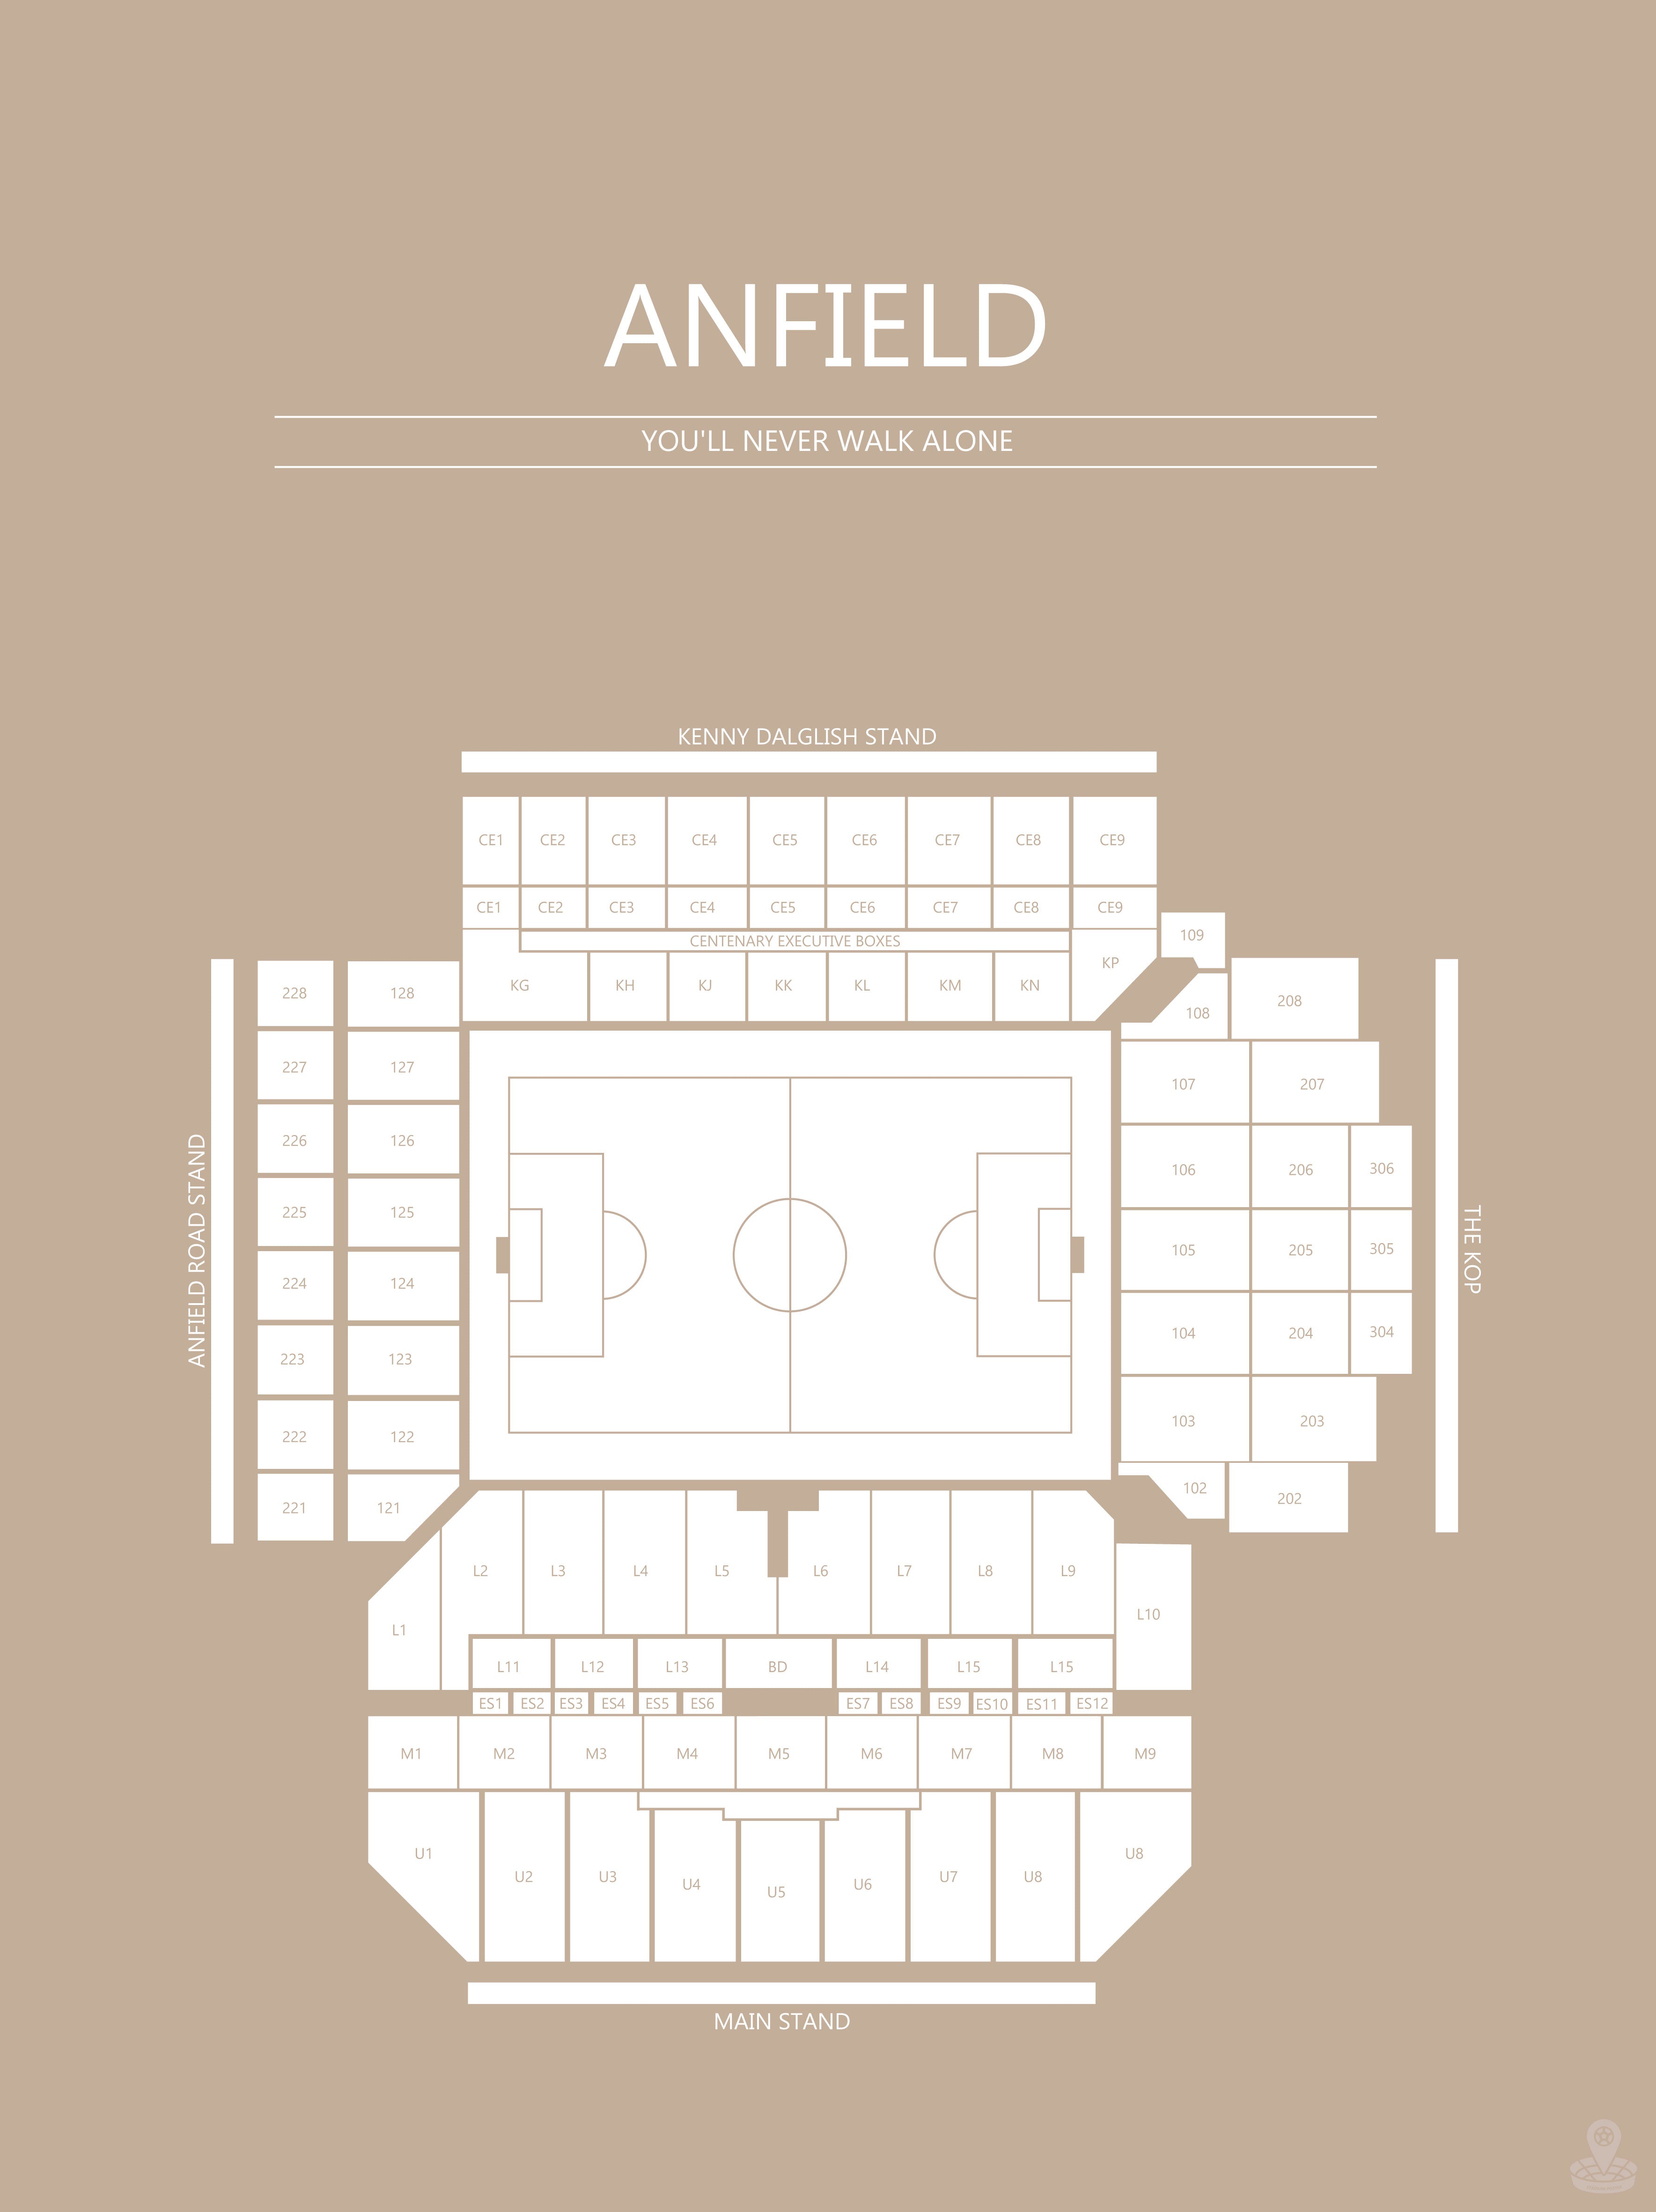 Fodbold plakat Liverpool Anfield stadium i sand